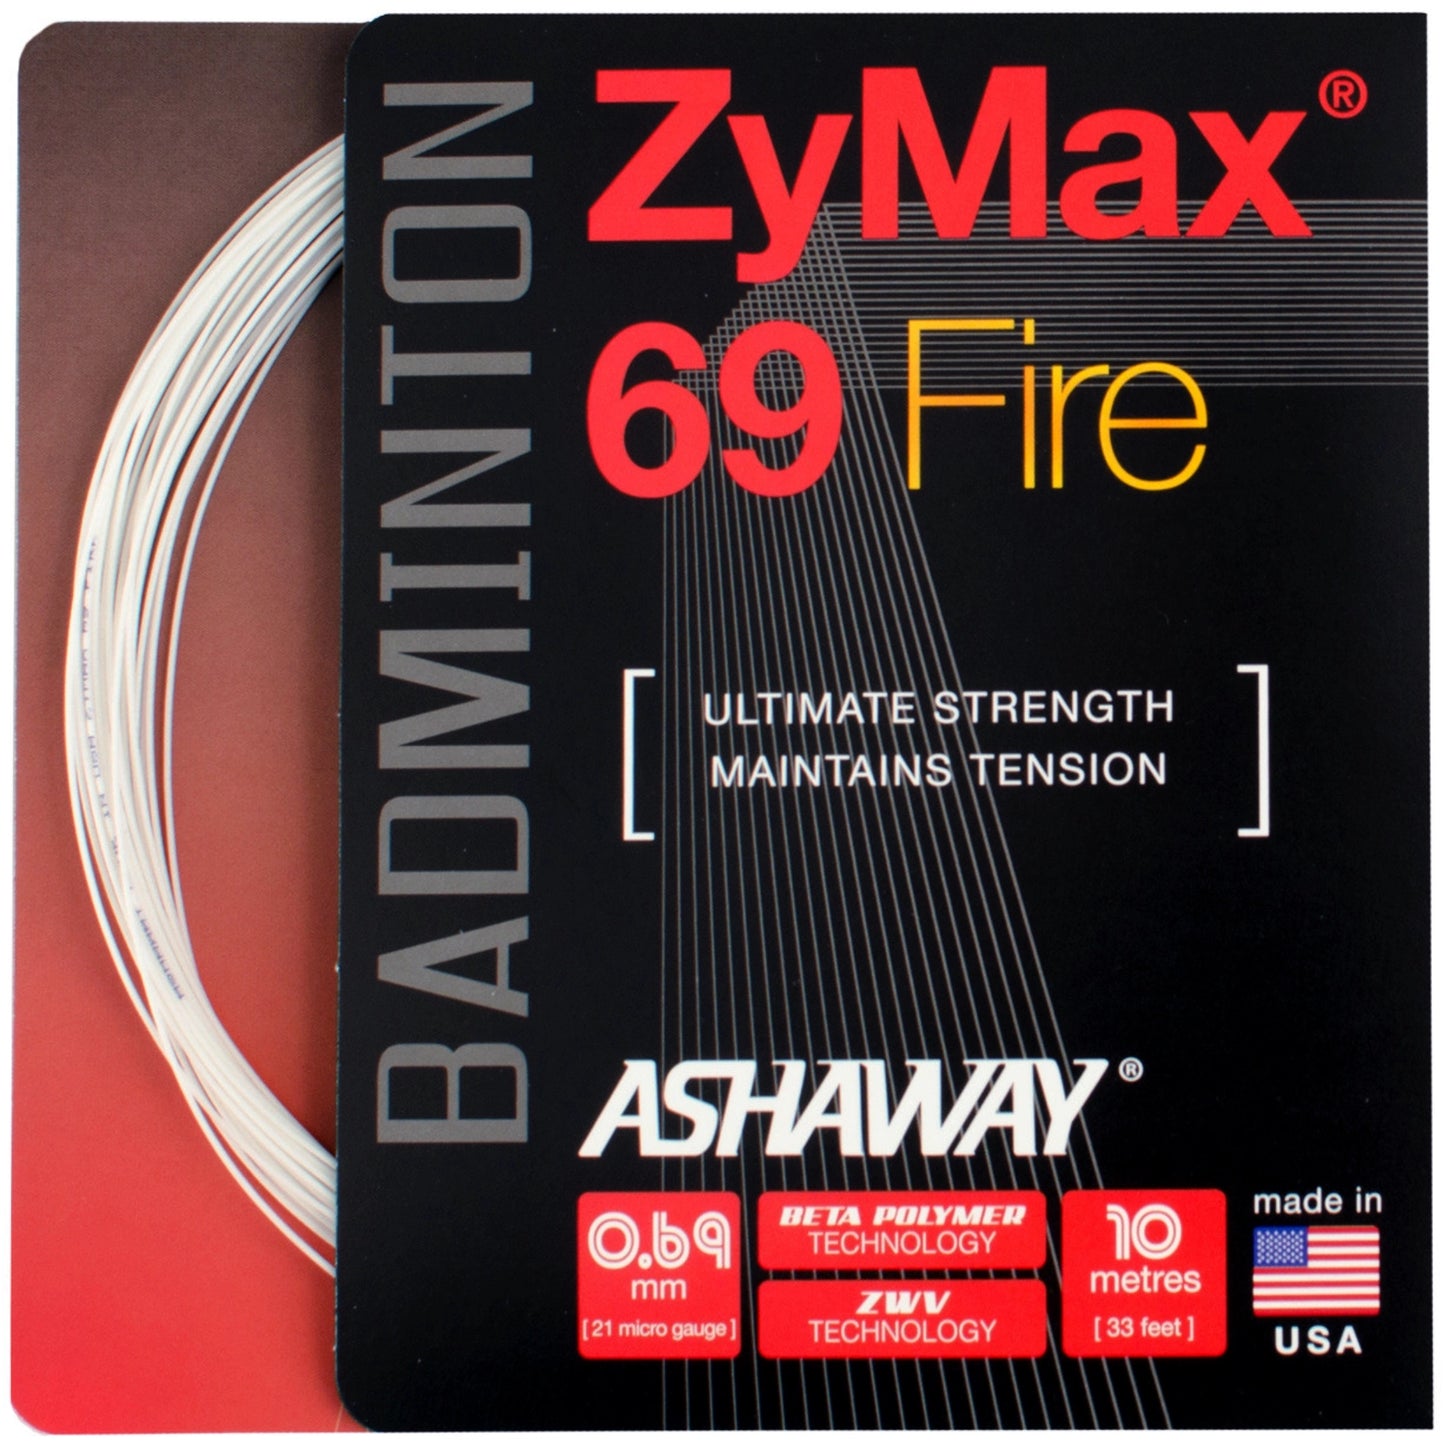 Ashaway ZyMax 69 Fire 10m White